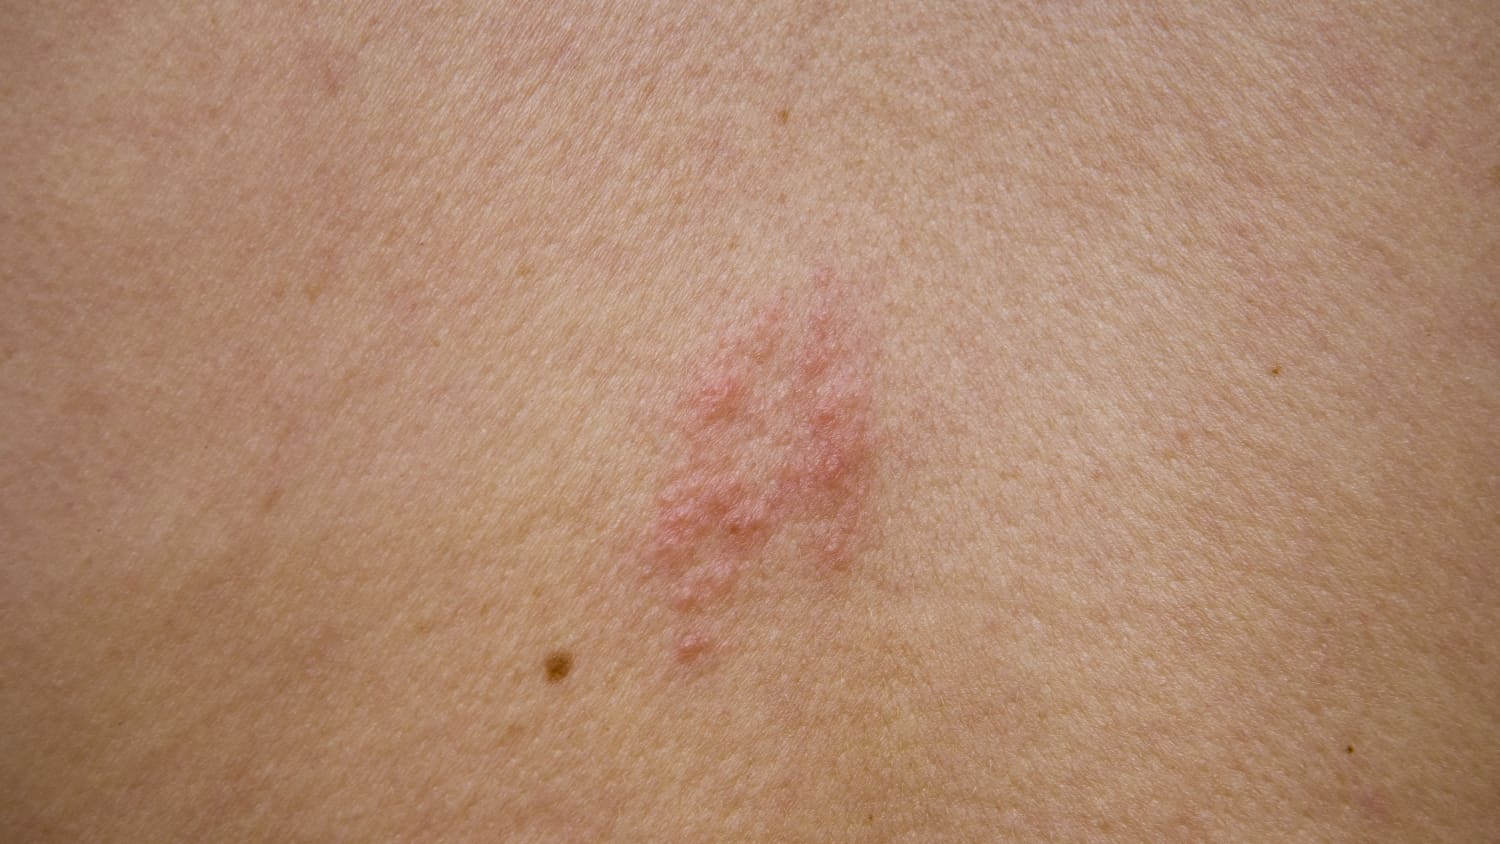 shingles on an individual's back